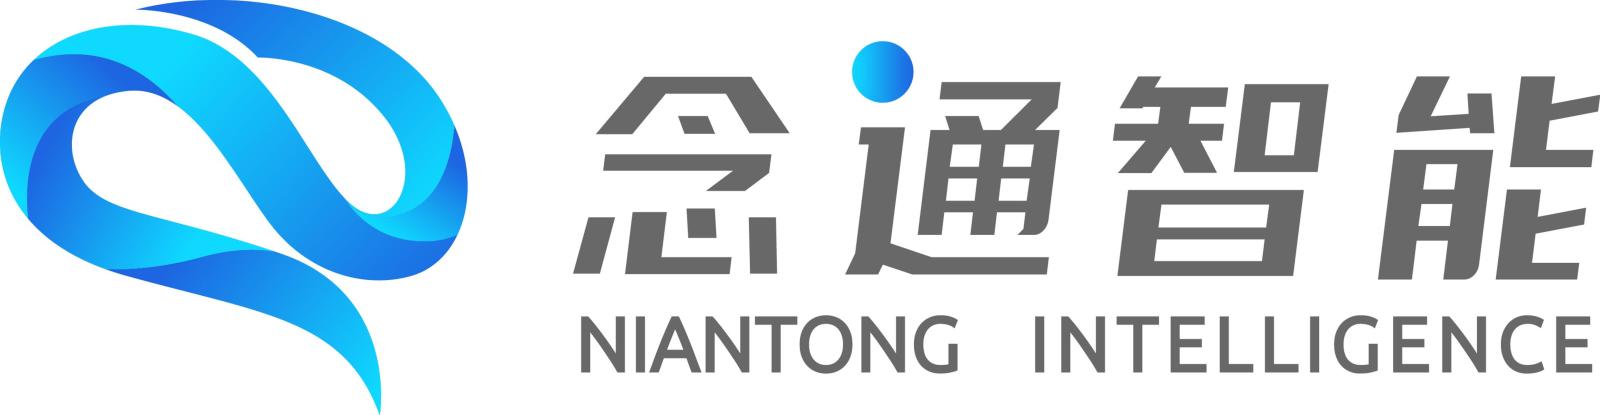 Shanghai Niantong Intelligence Co. logo